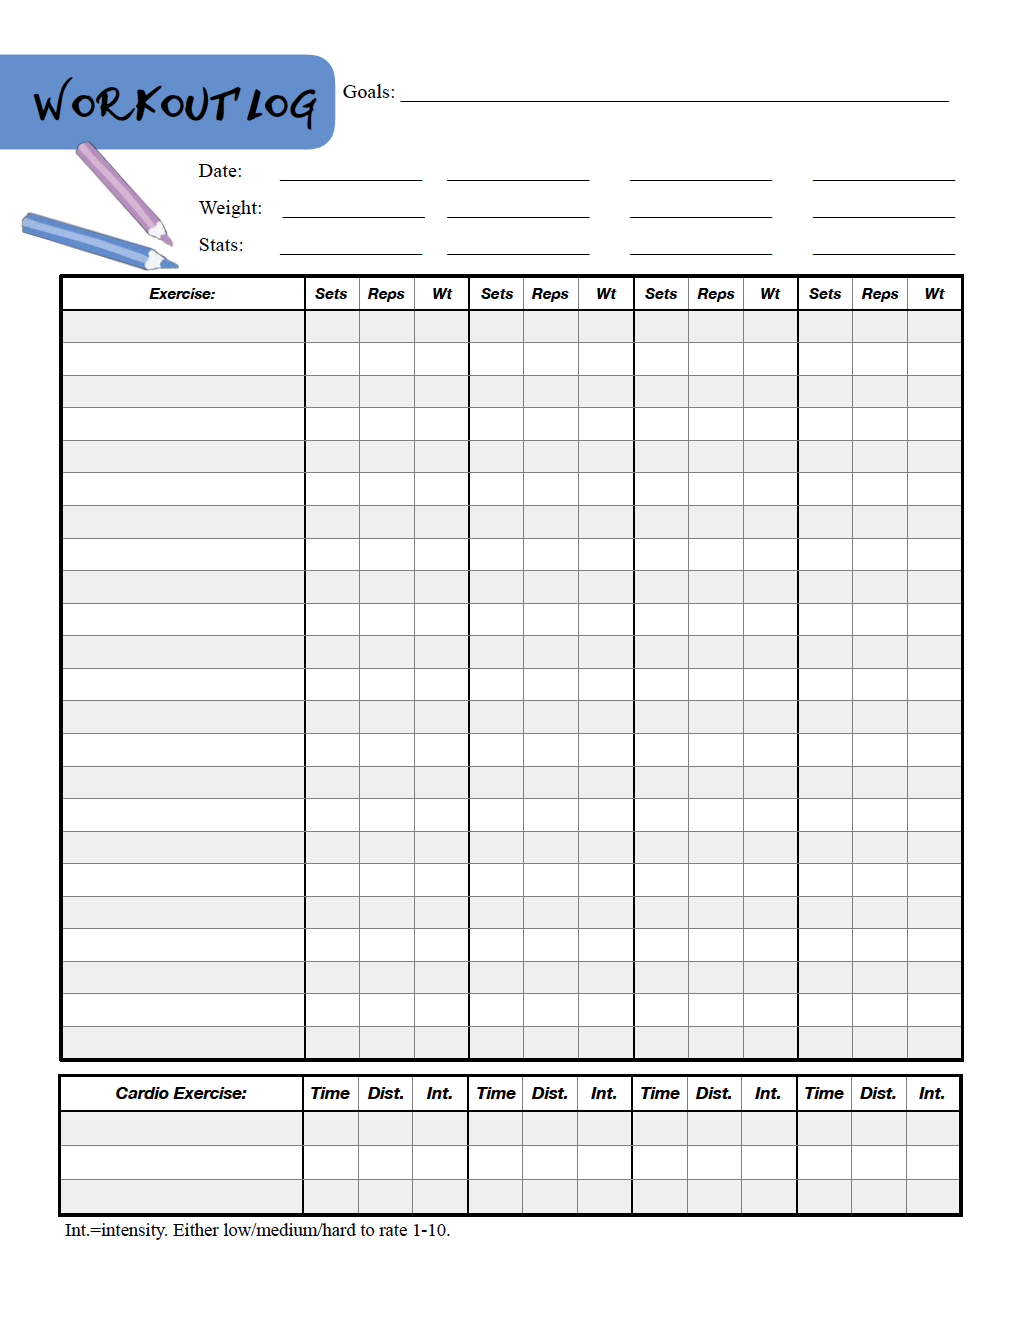 40-effective-workout-log-calendar-templates-templatelab